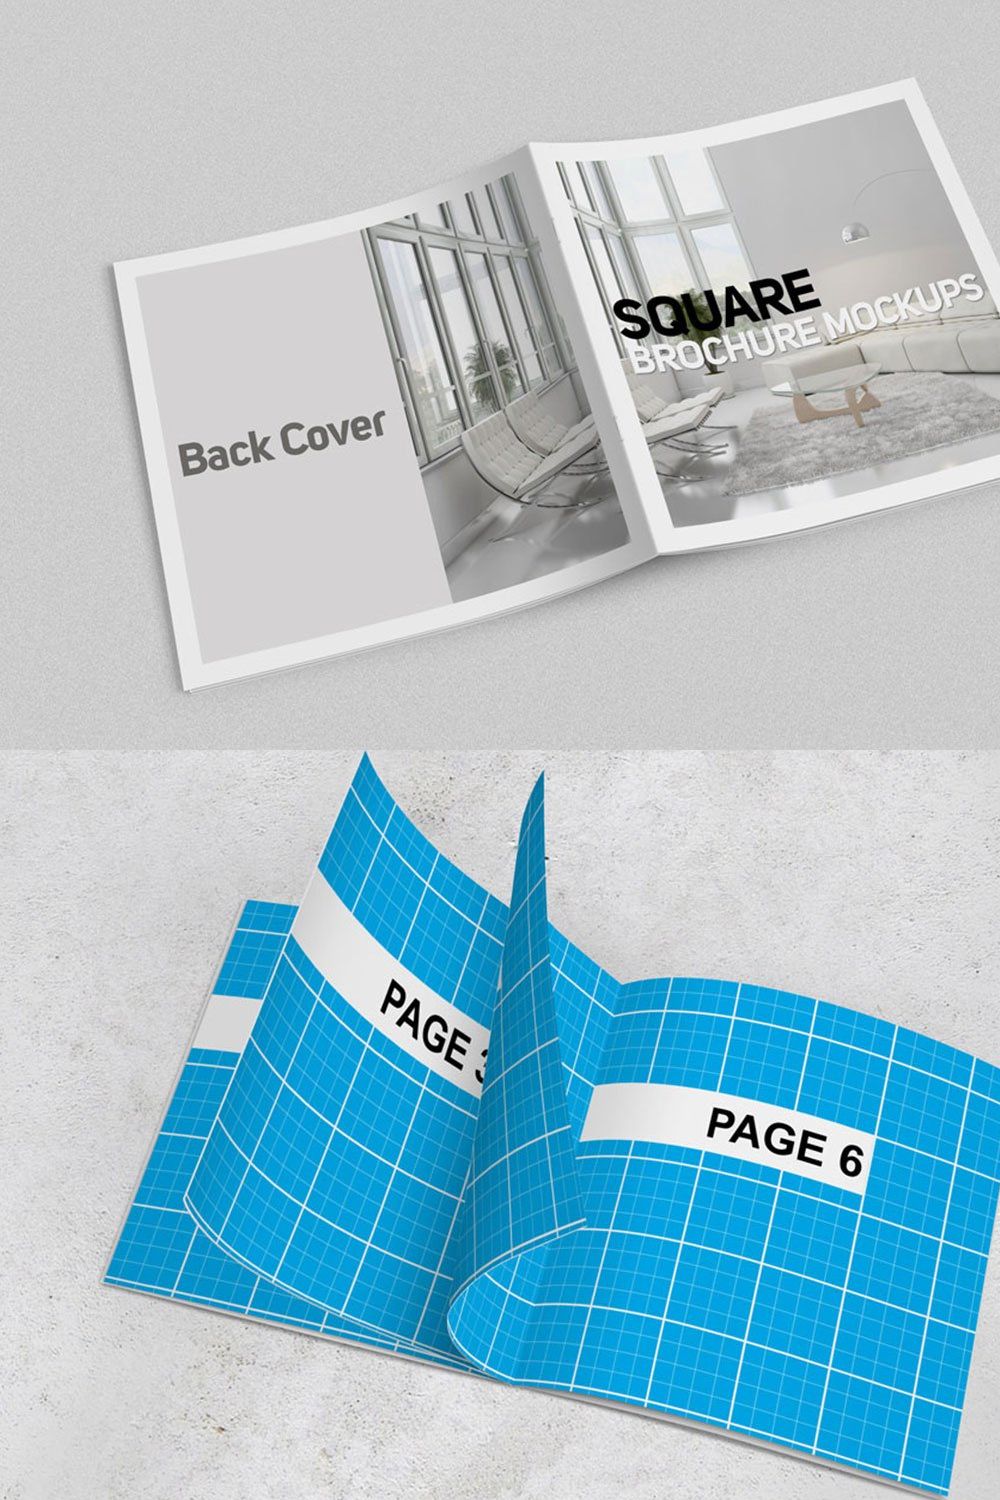 Square Brochure Mockups pinterest preview image.